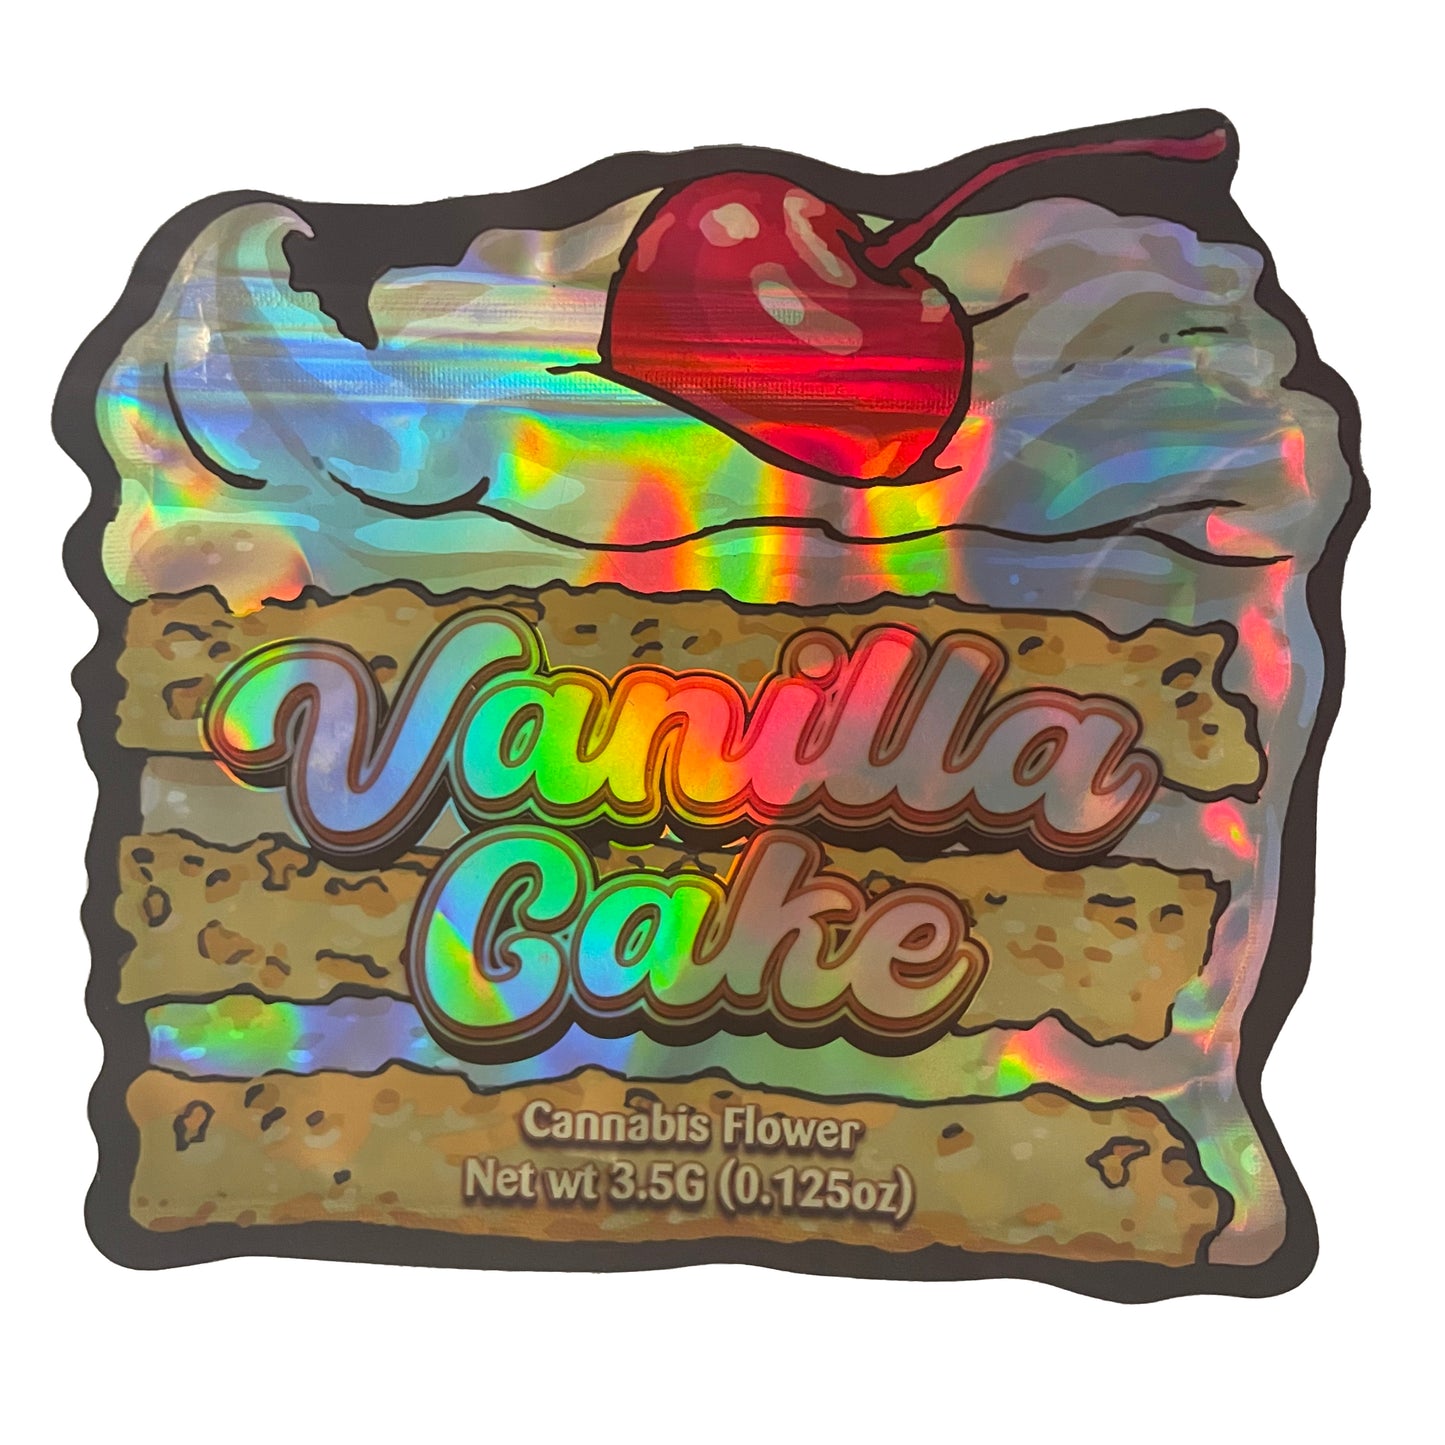 Vanilla Cake Cutout 3.5G Mylar Bags